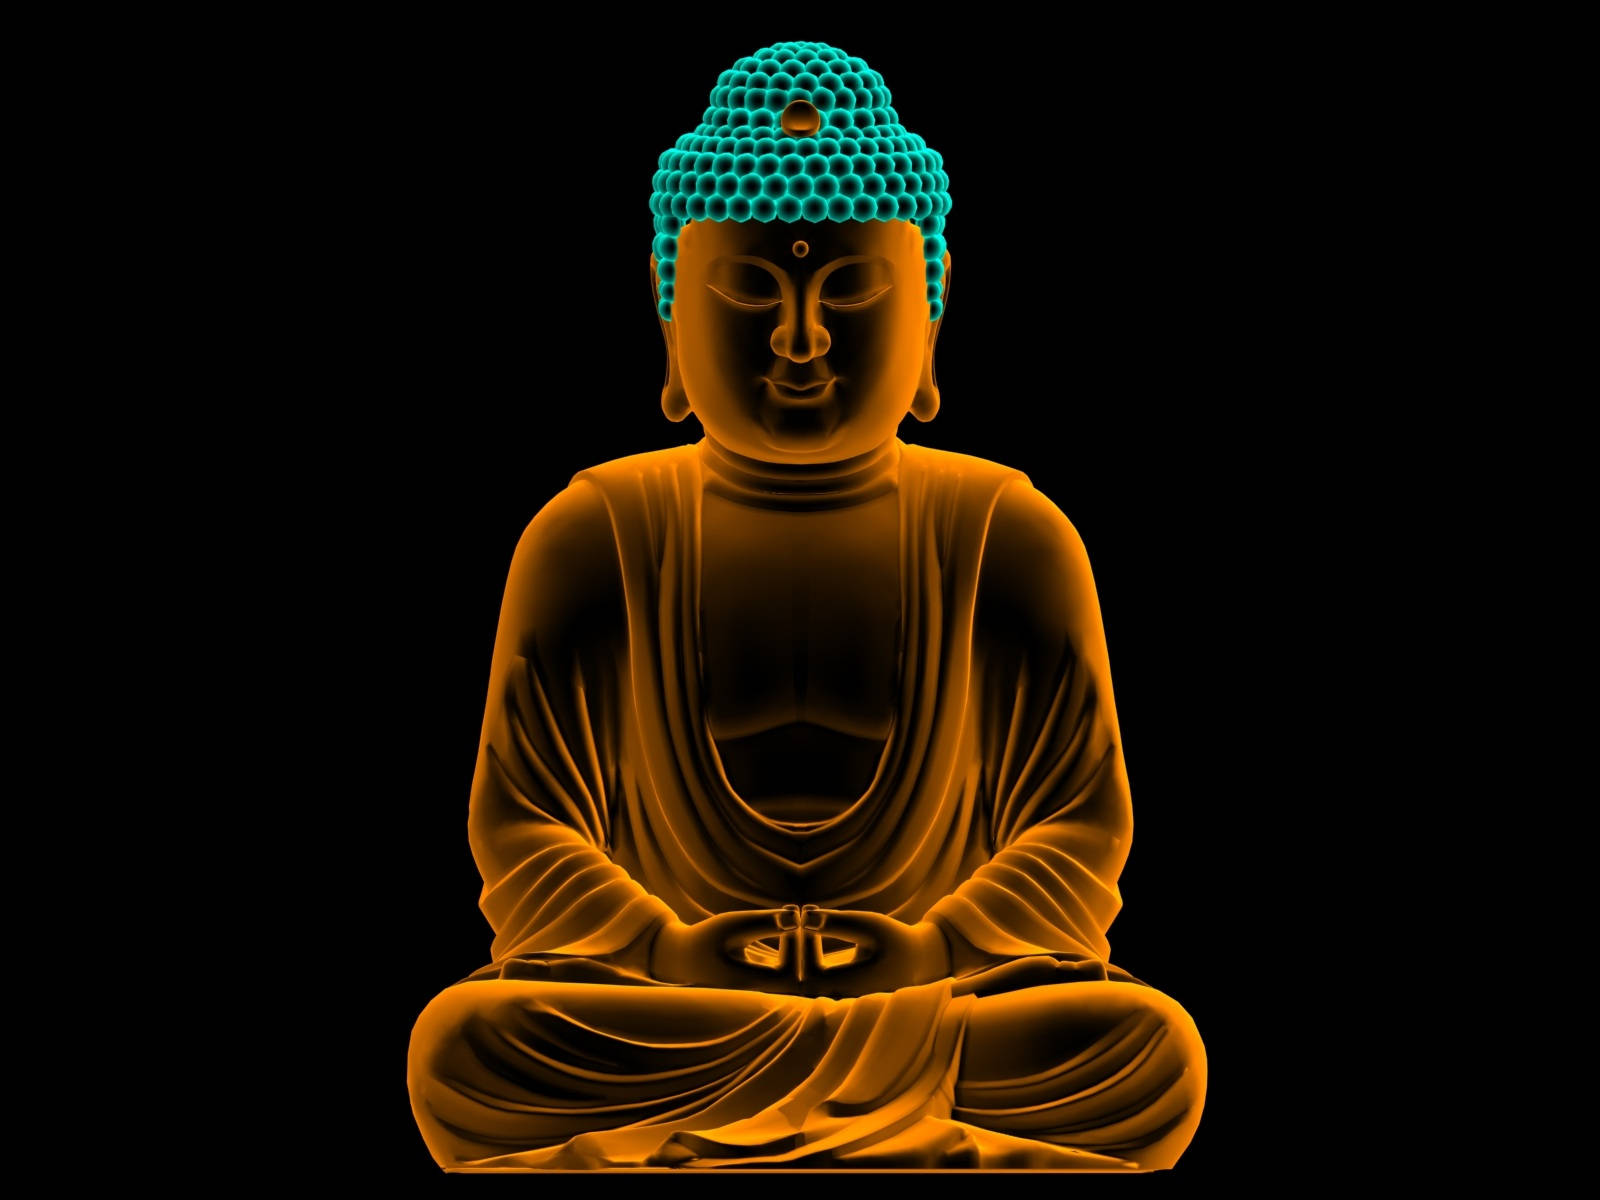 Buddha 3d Luminous Orange Statue Background